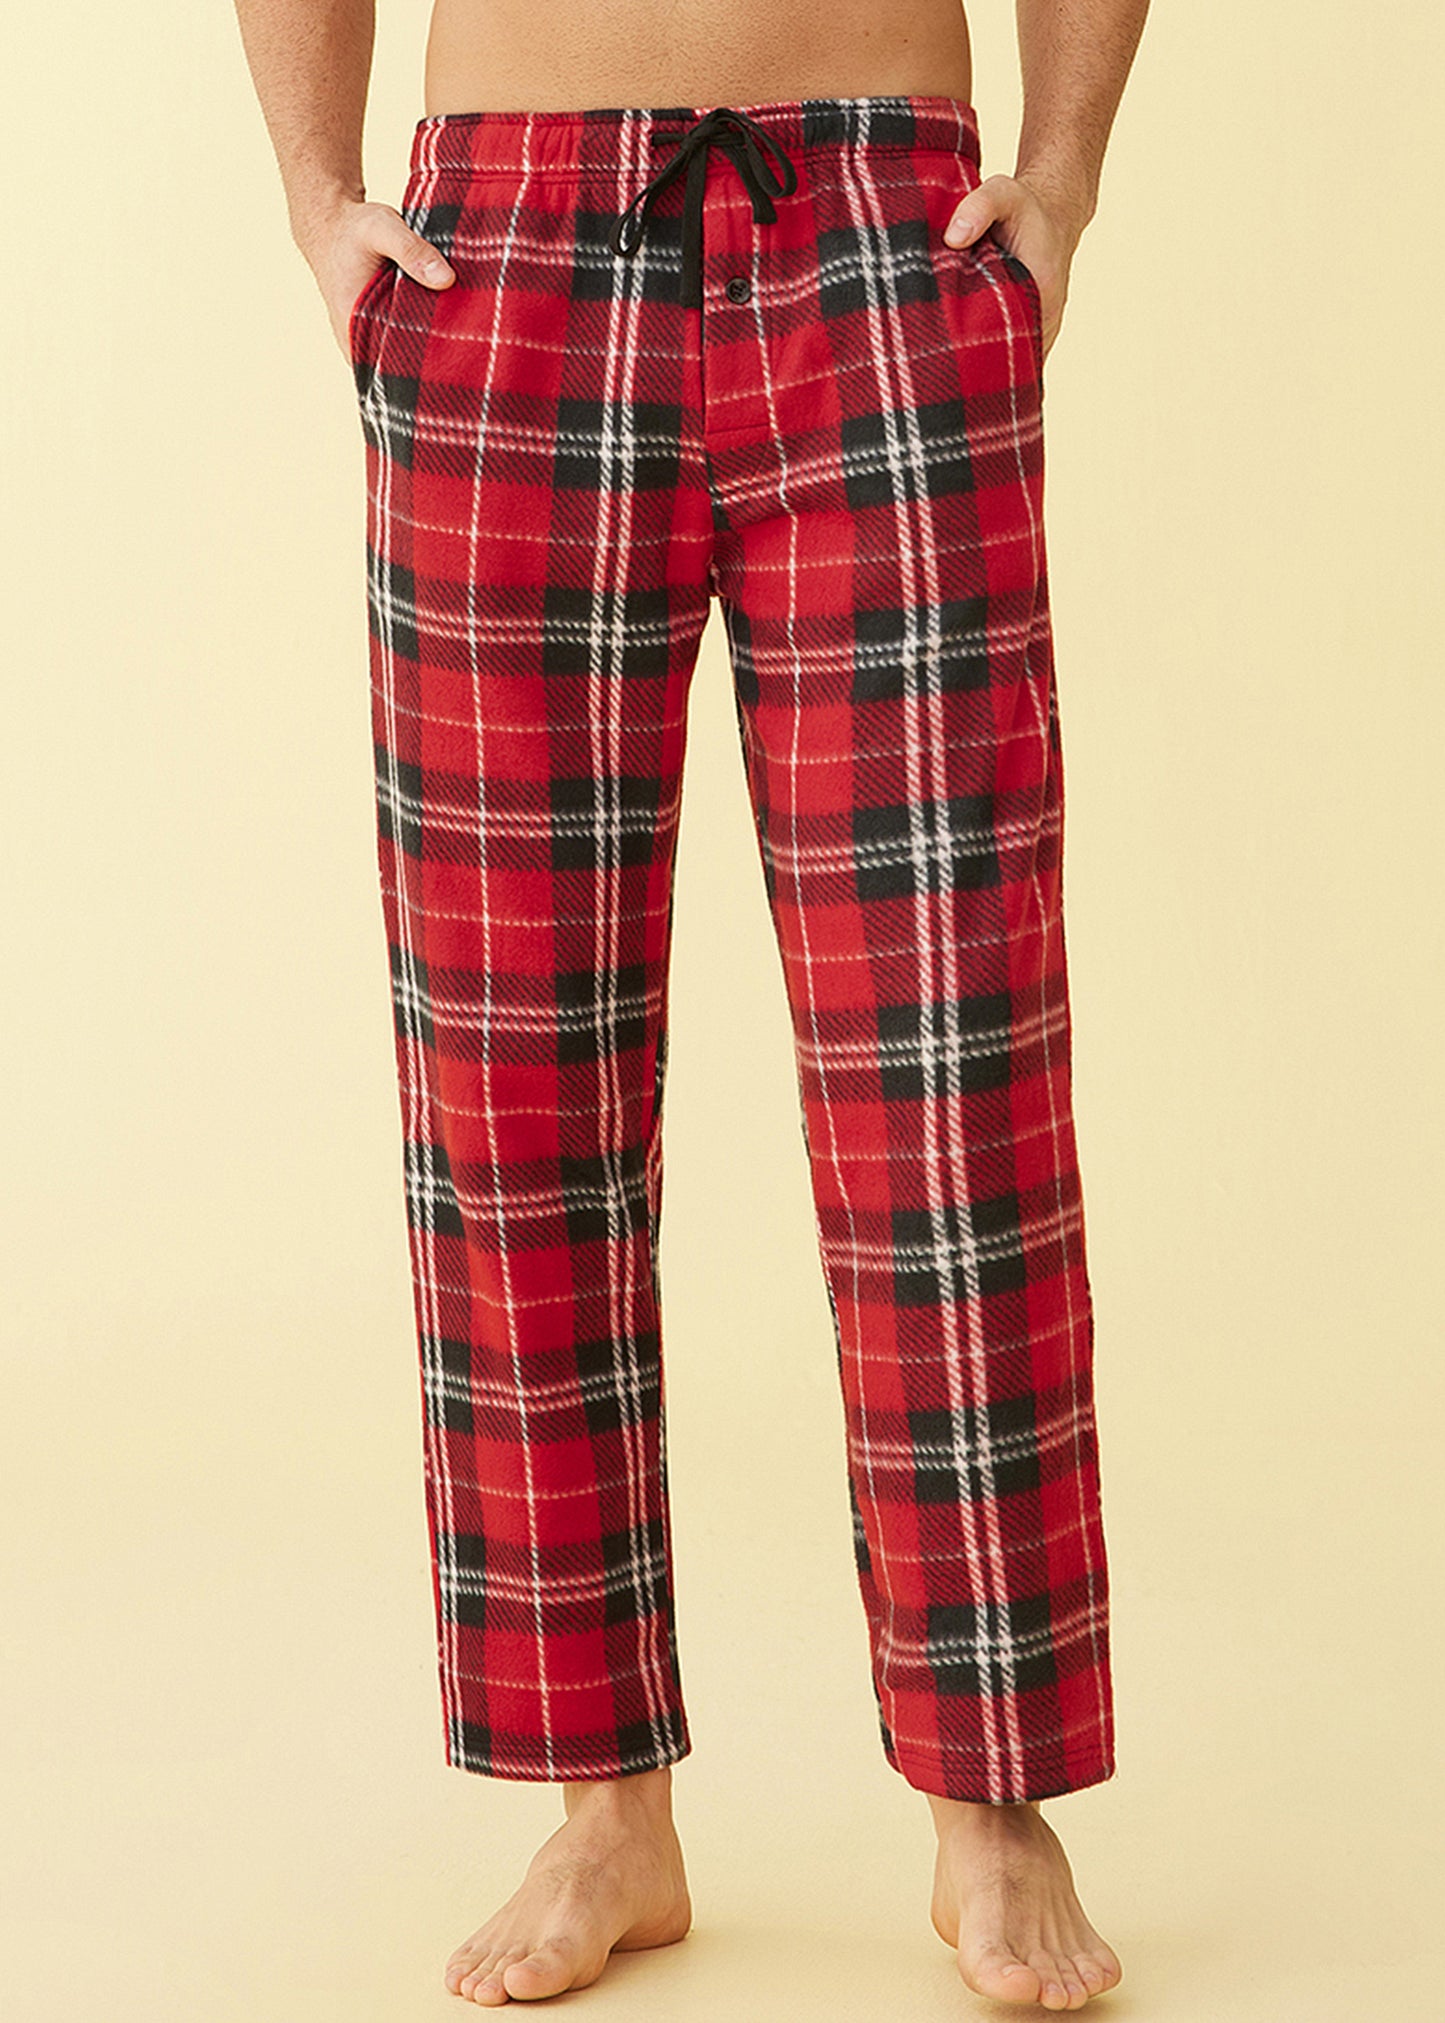 Men's Fleece Plaid Lounge Pajama Pants with Pockets